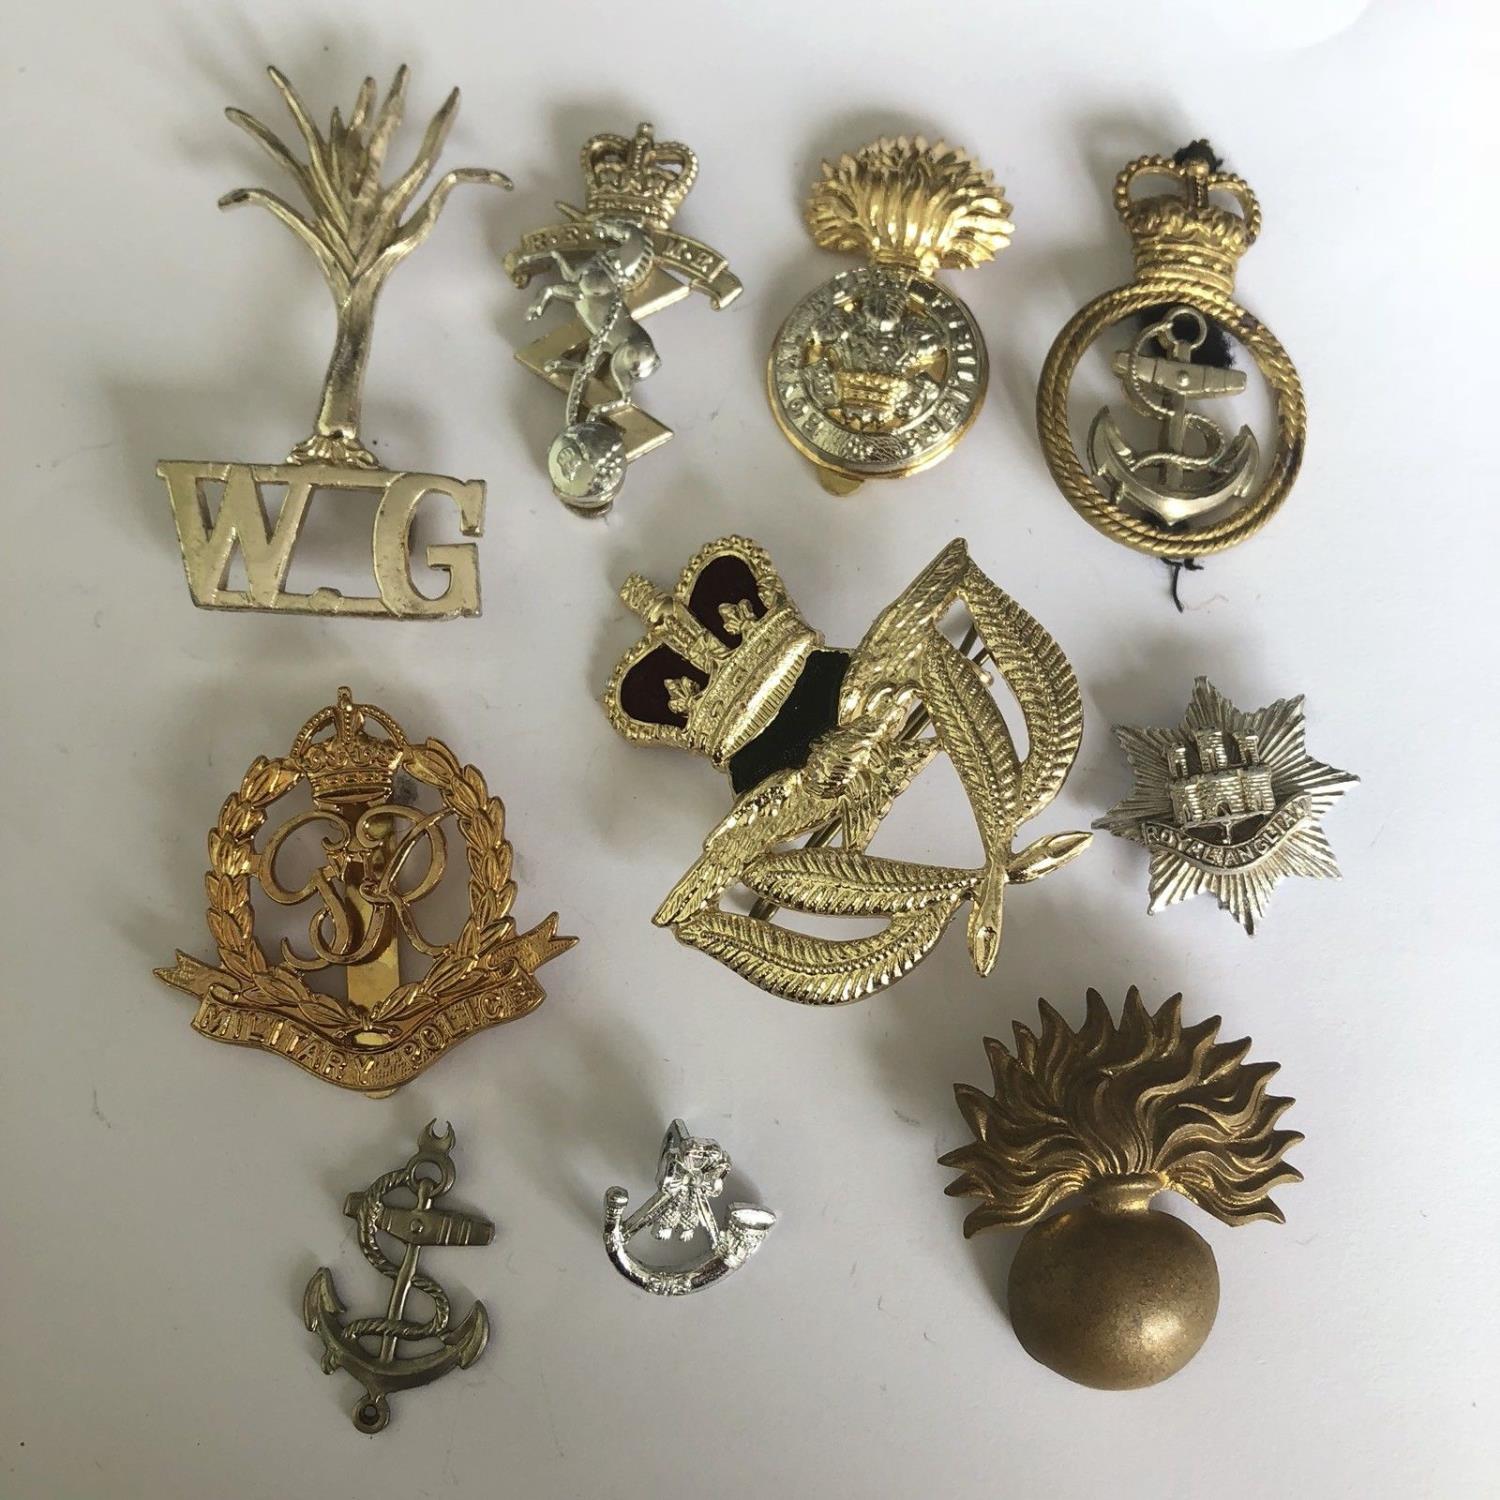 Group of 10 British military cap badges